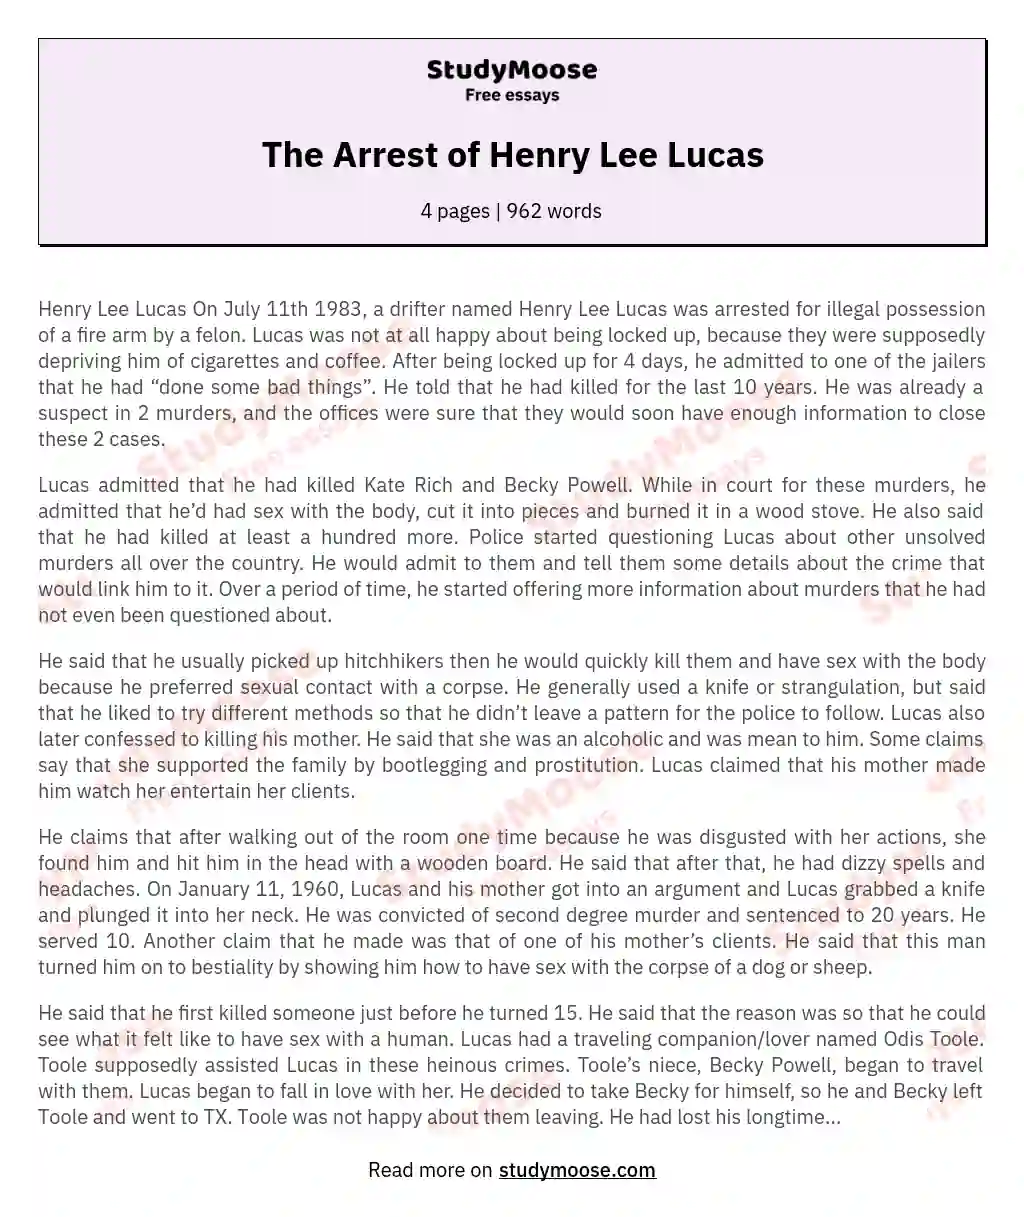 The Arrest of Henry Lee Lucas essay